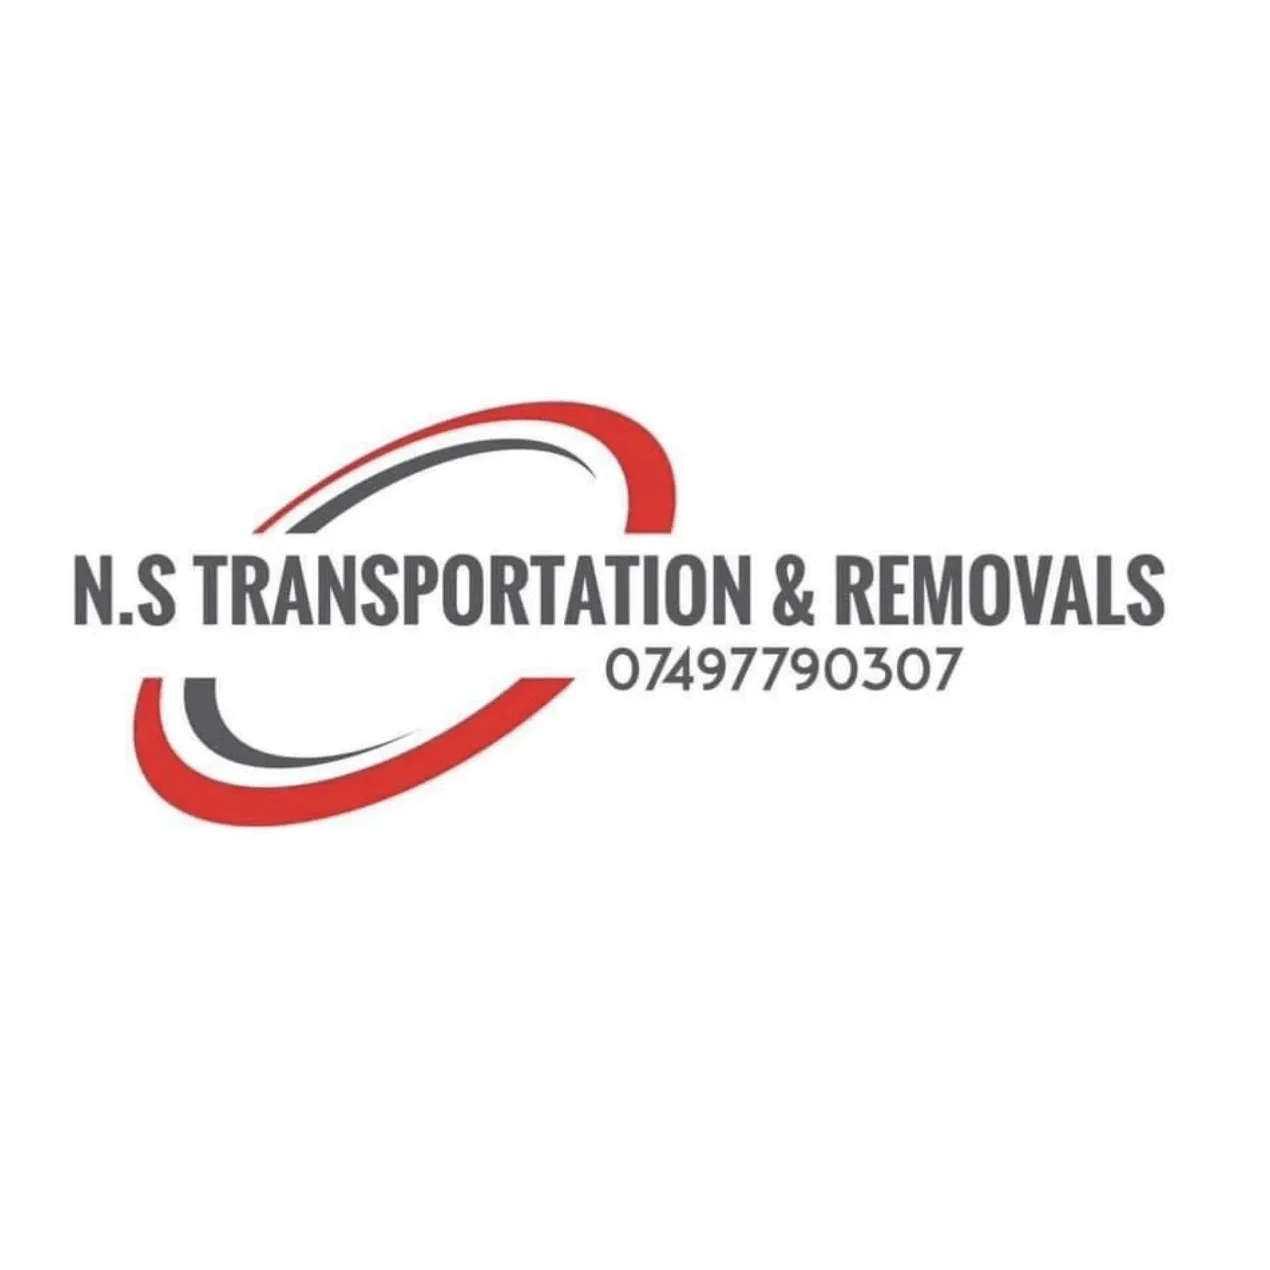 N.S Transportation & Removals - Stone, Staffordshire - 07497 790307 | ShowMeLocal.com